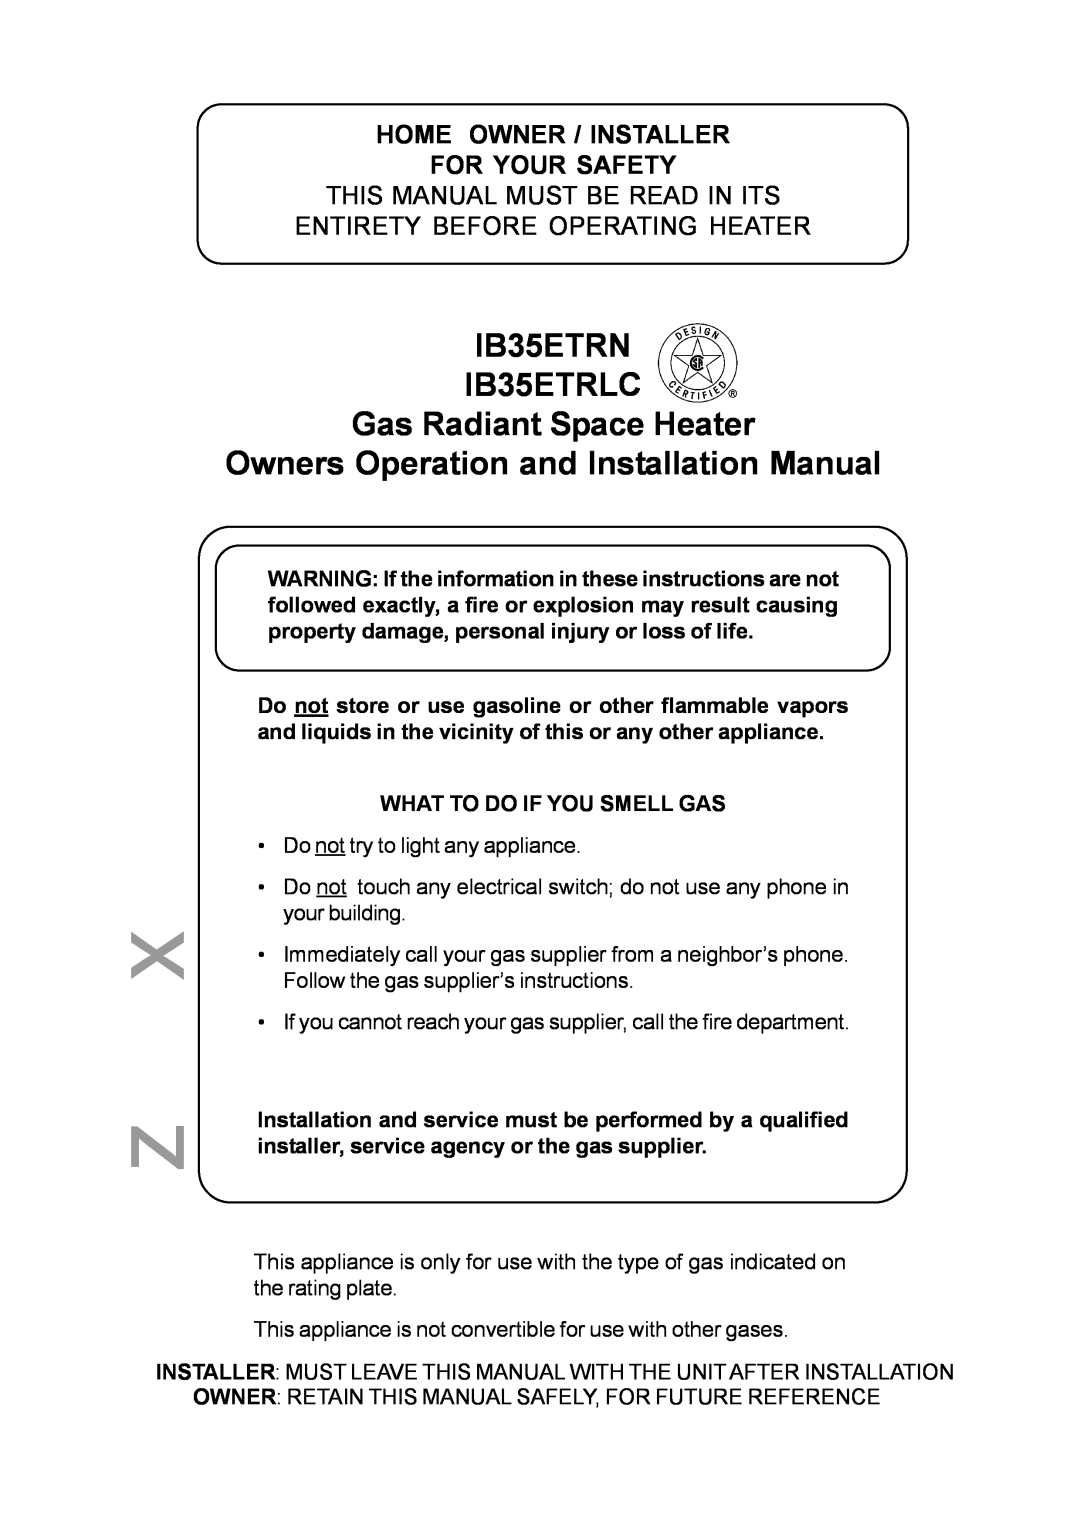 Rinnai installation manual IB35ETRN IB35ETRLC Gas Radiant Space Heater, Owners Operation and Installation Manual 